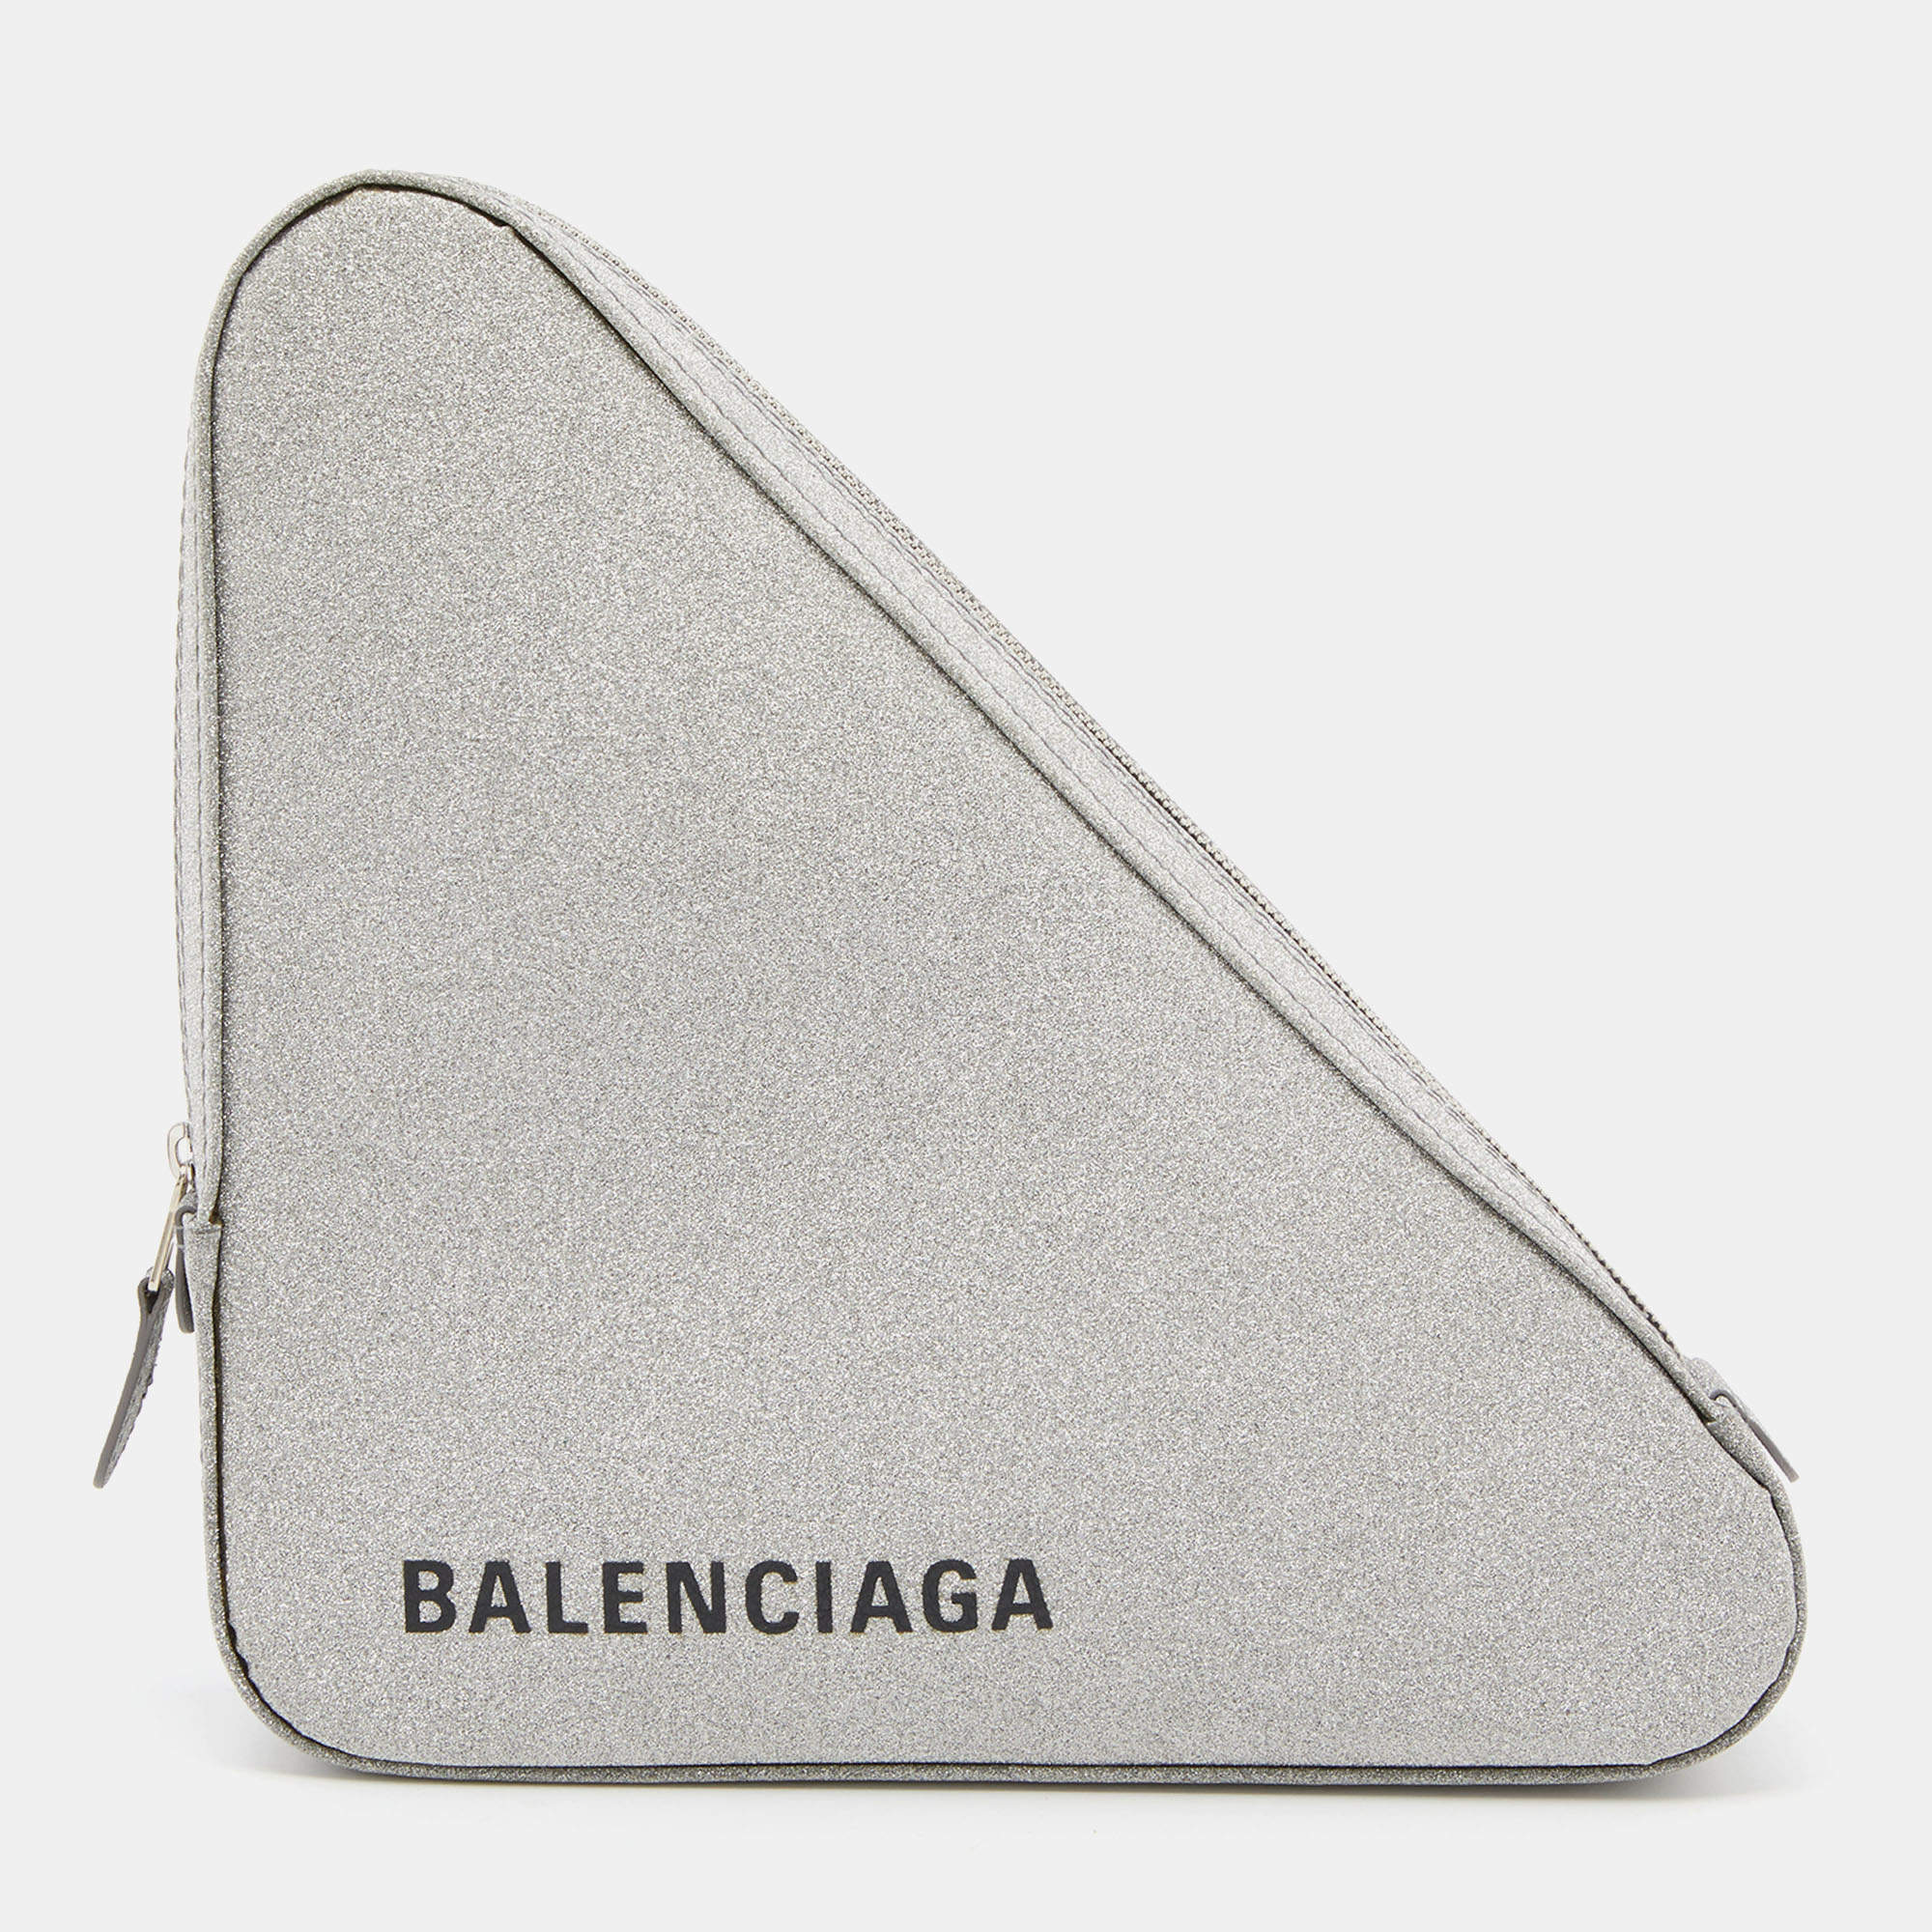 Balenciaga Silver Glitter Triangle Zip Clutch